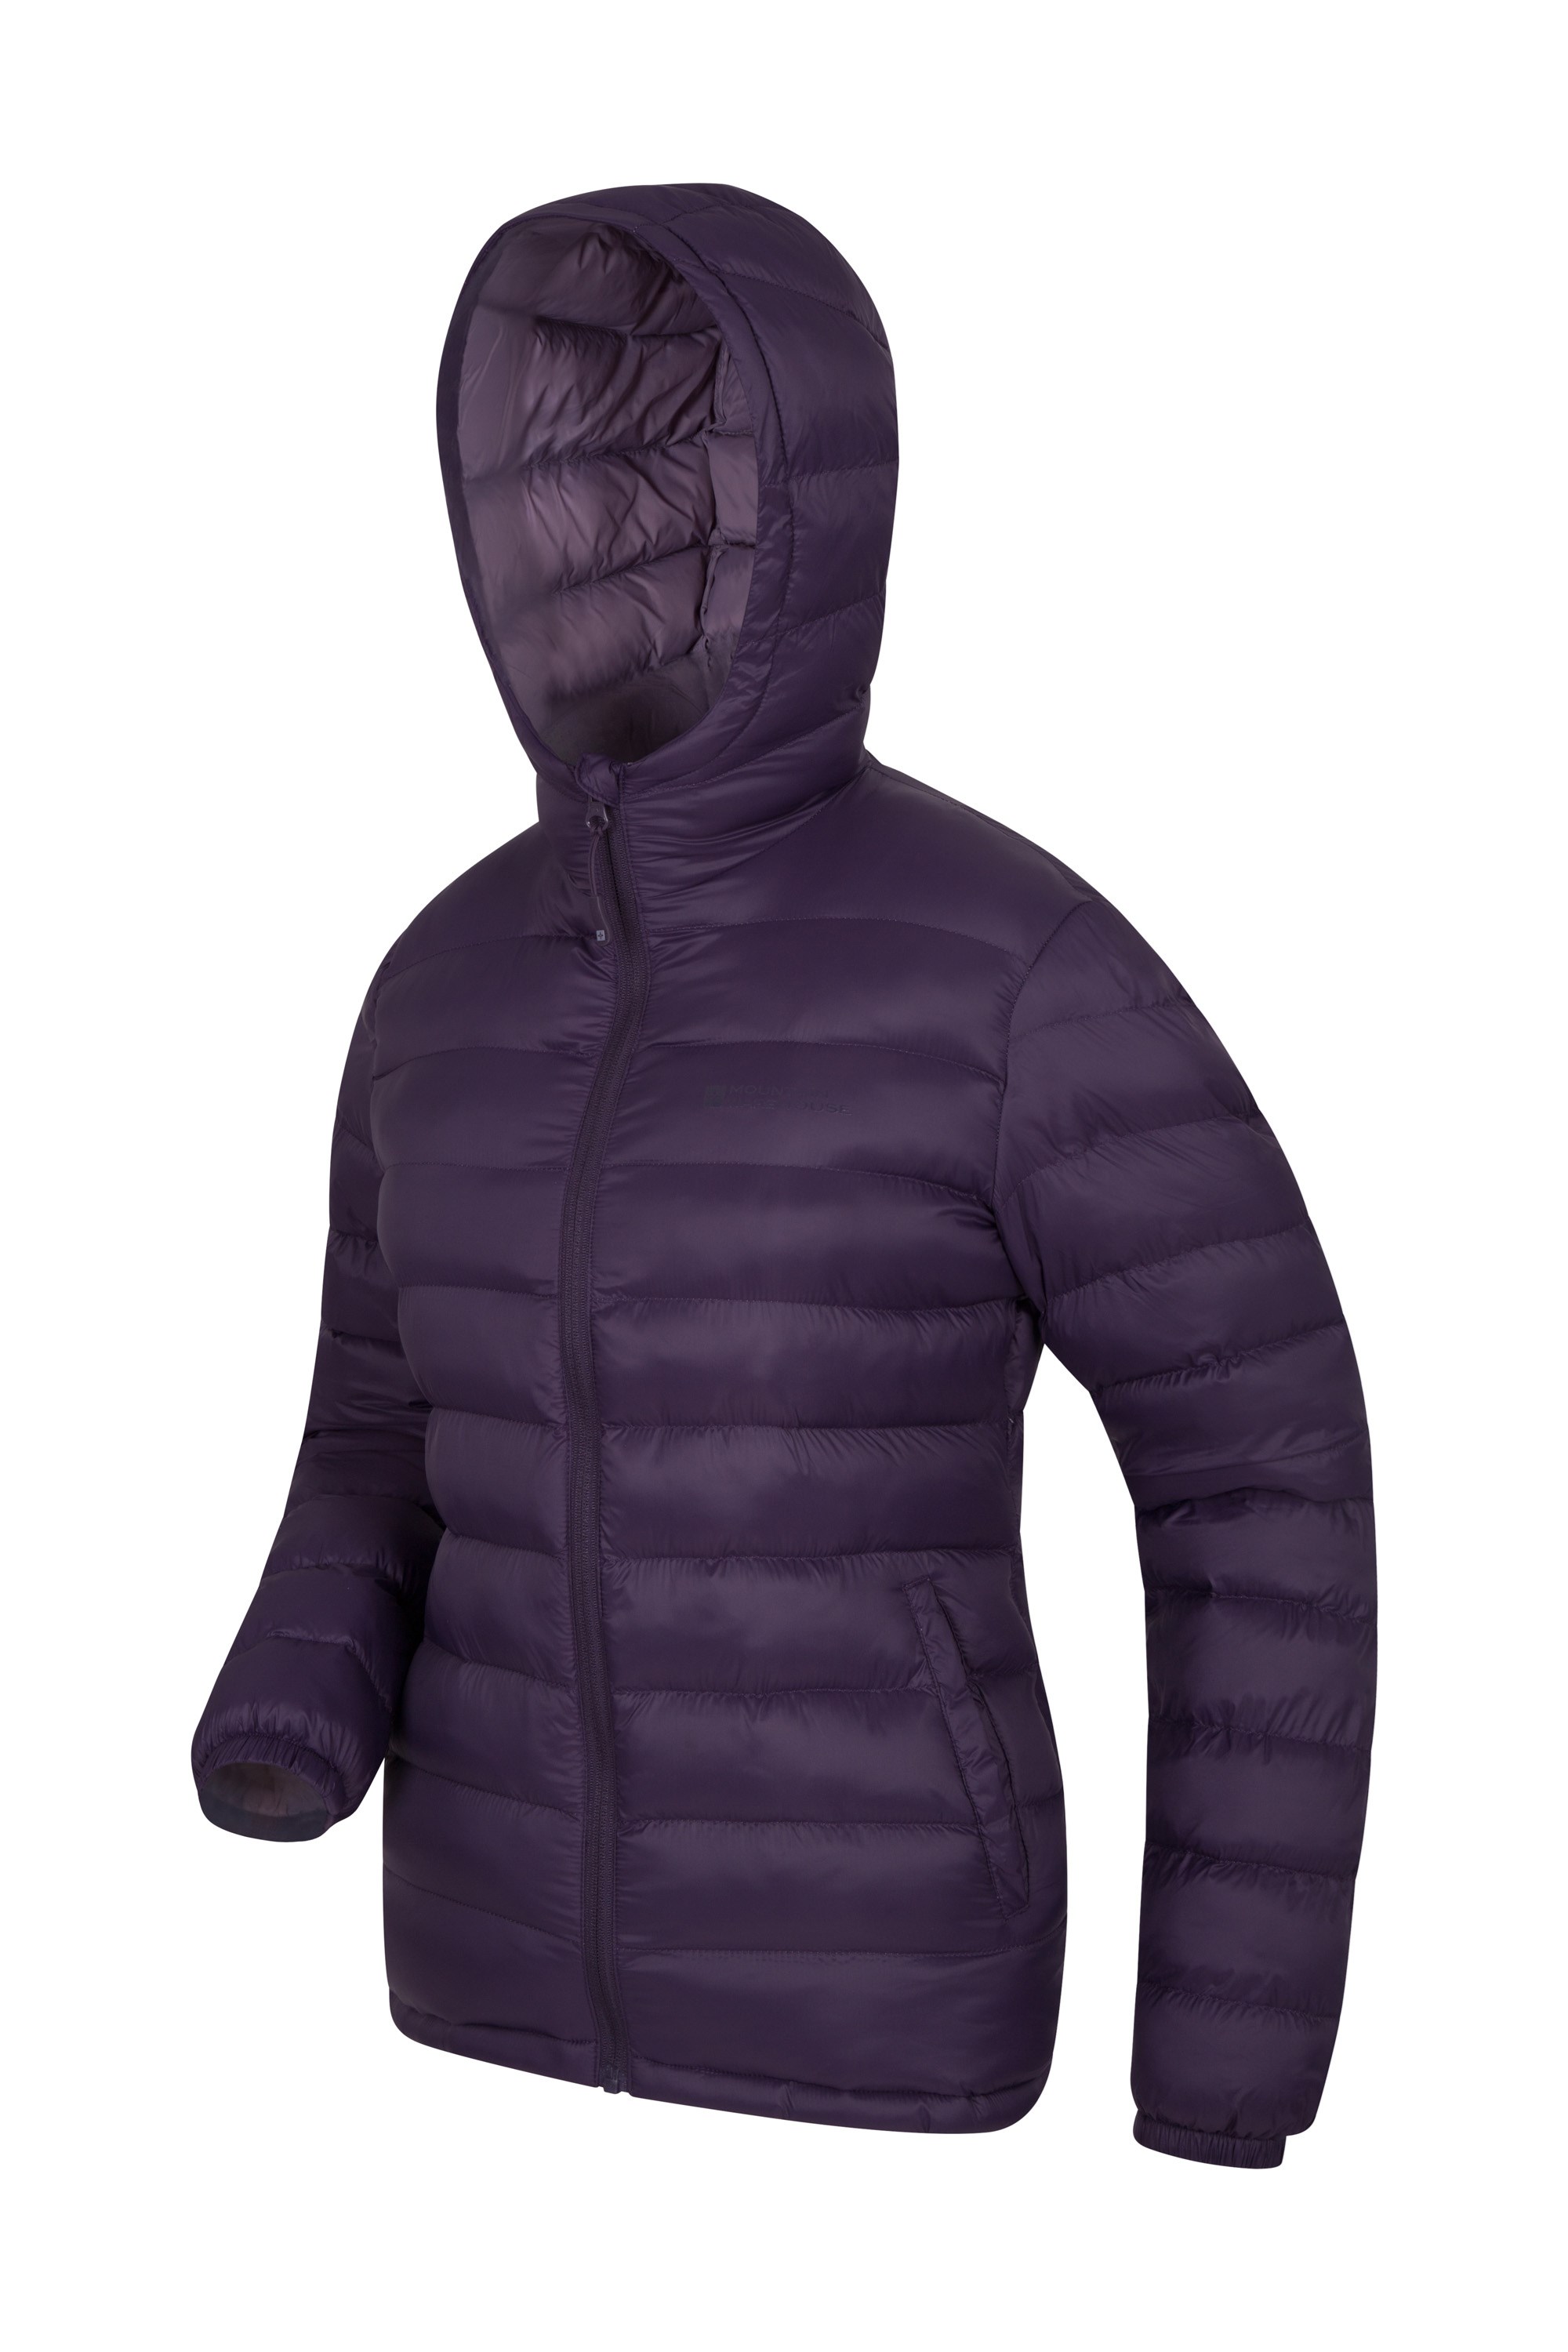 For Winter Jet Black 10 Mountain Warehouse Seasons Womens Padded Jacket